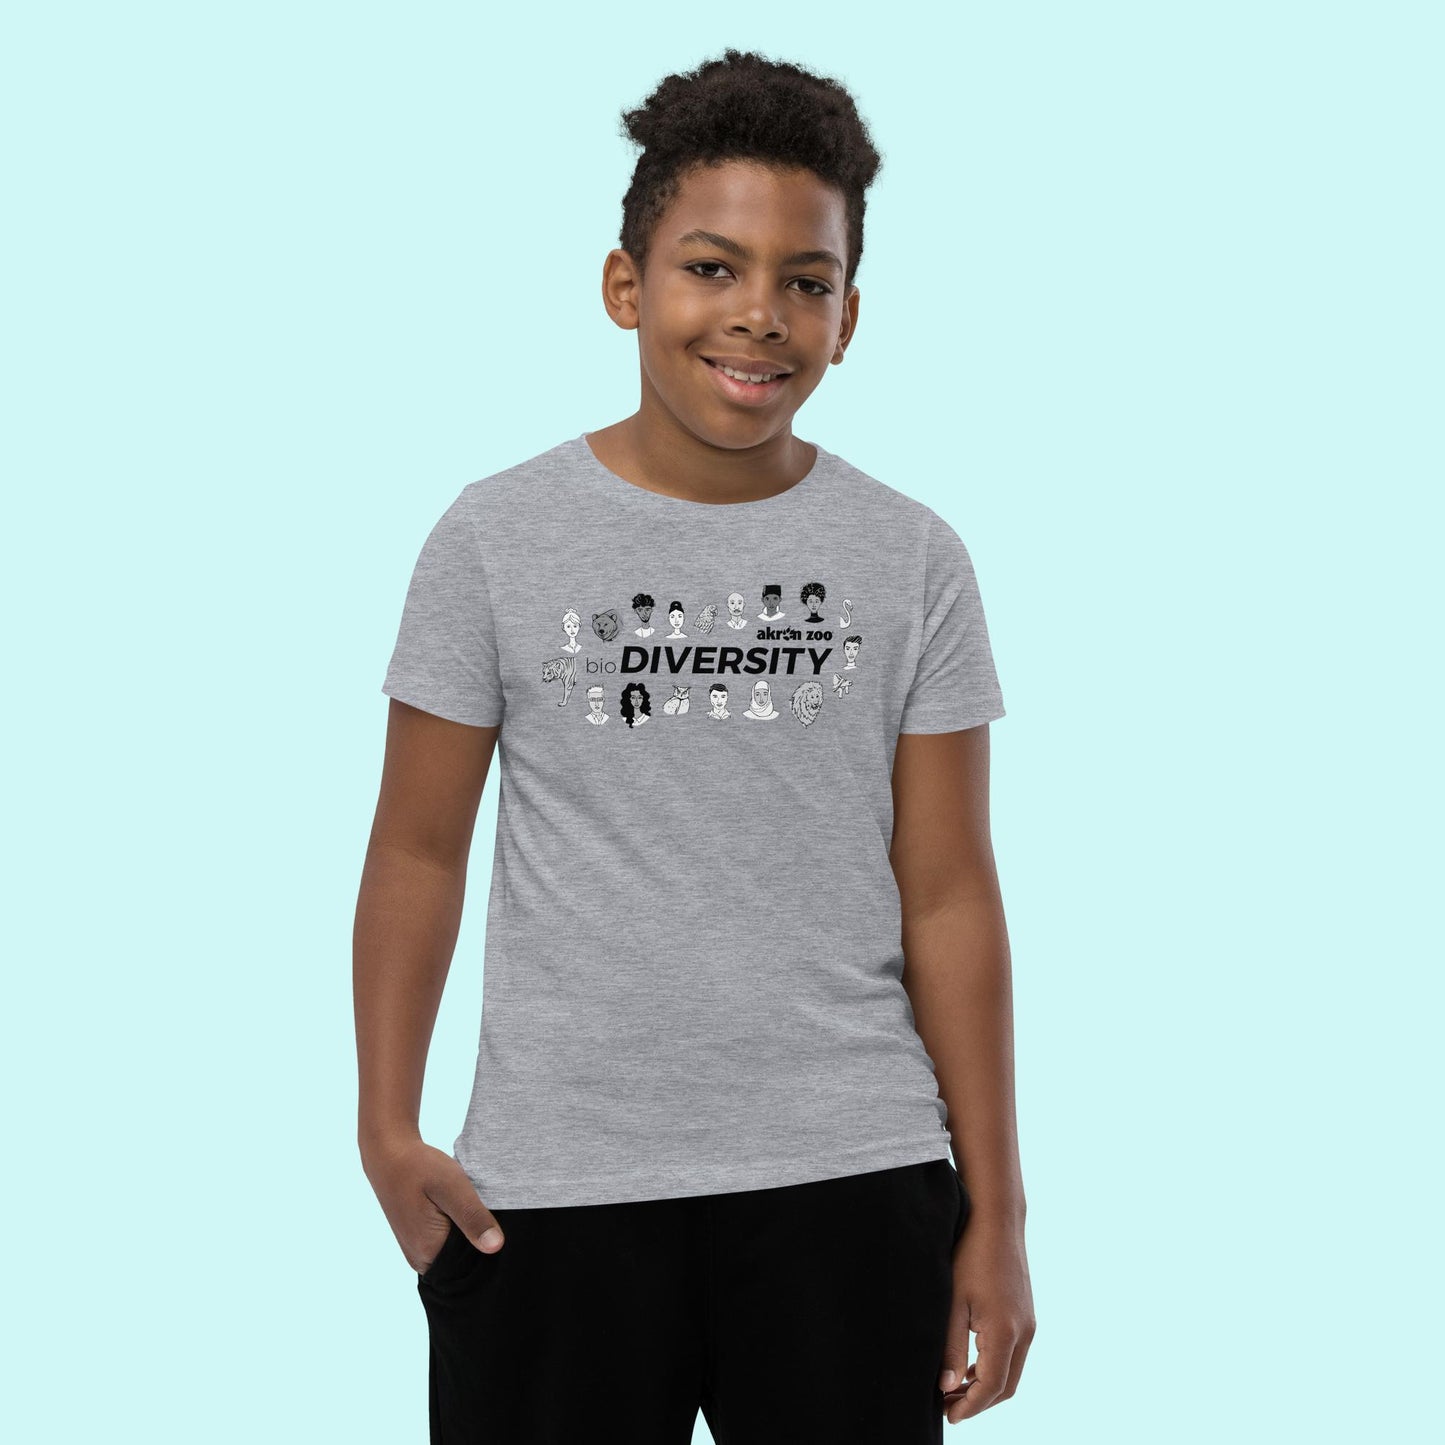 bio DIVERSITY - Youth Short Sleeve T-Shirt